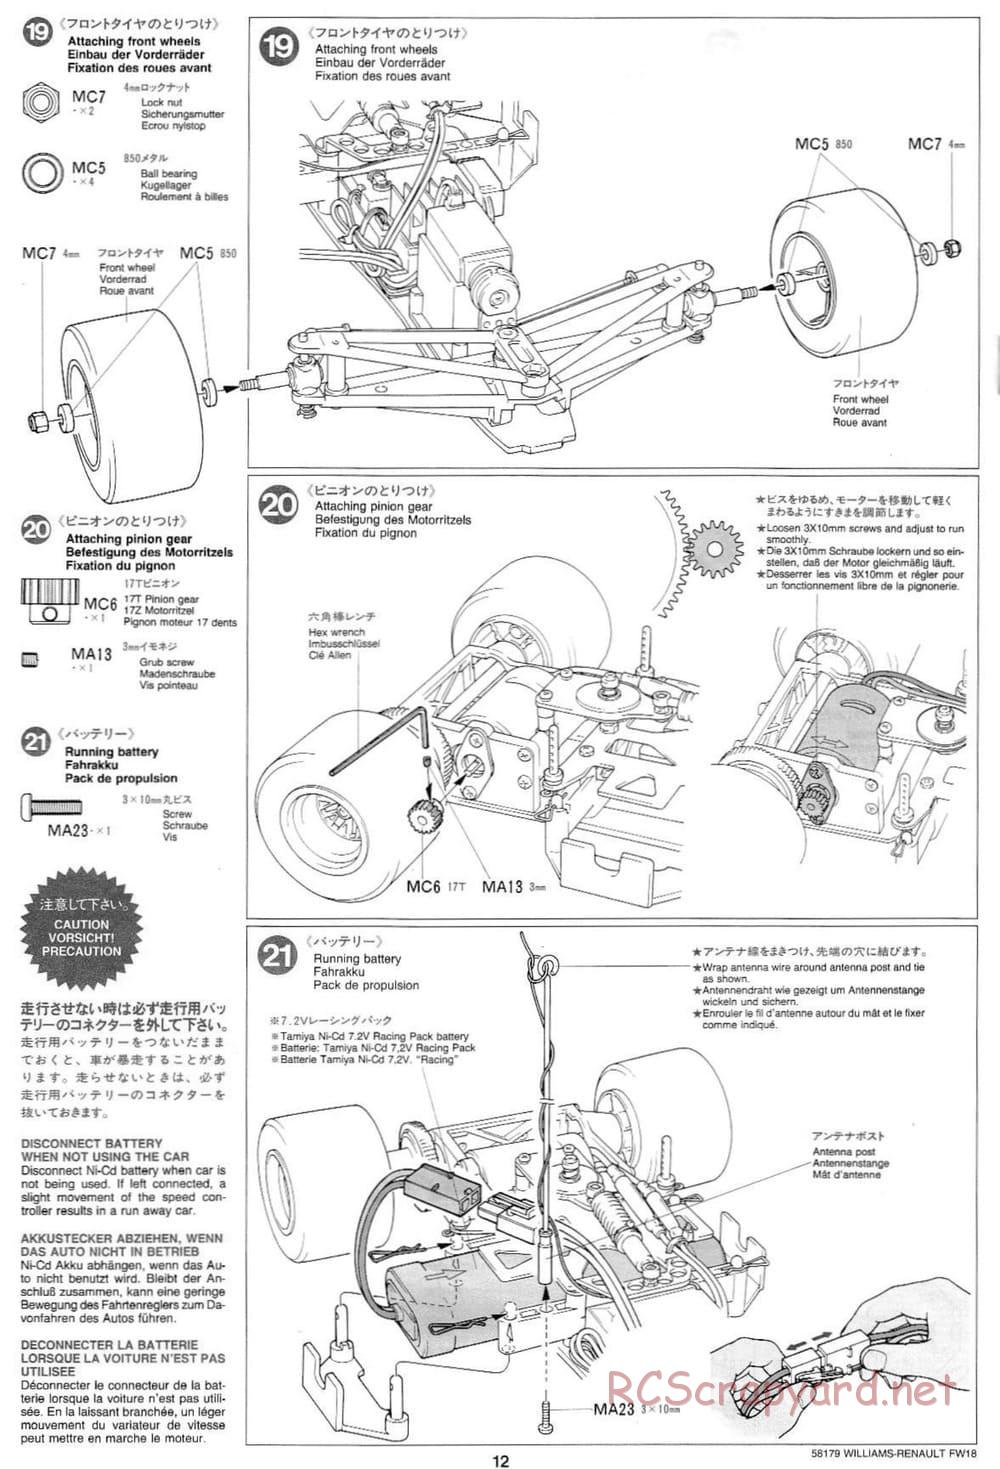 Tamiya - Williams Renault FW18 - F103RS Chassis - Manual - Page 12